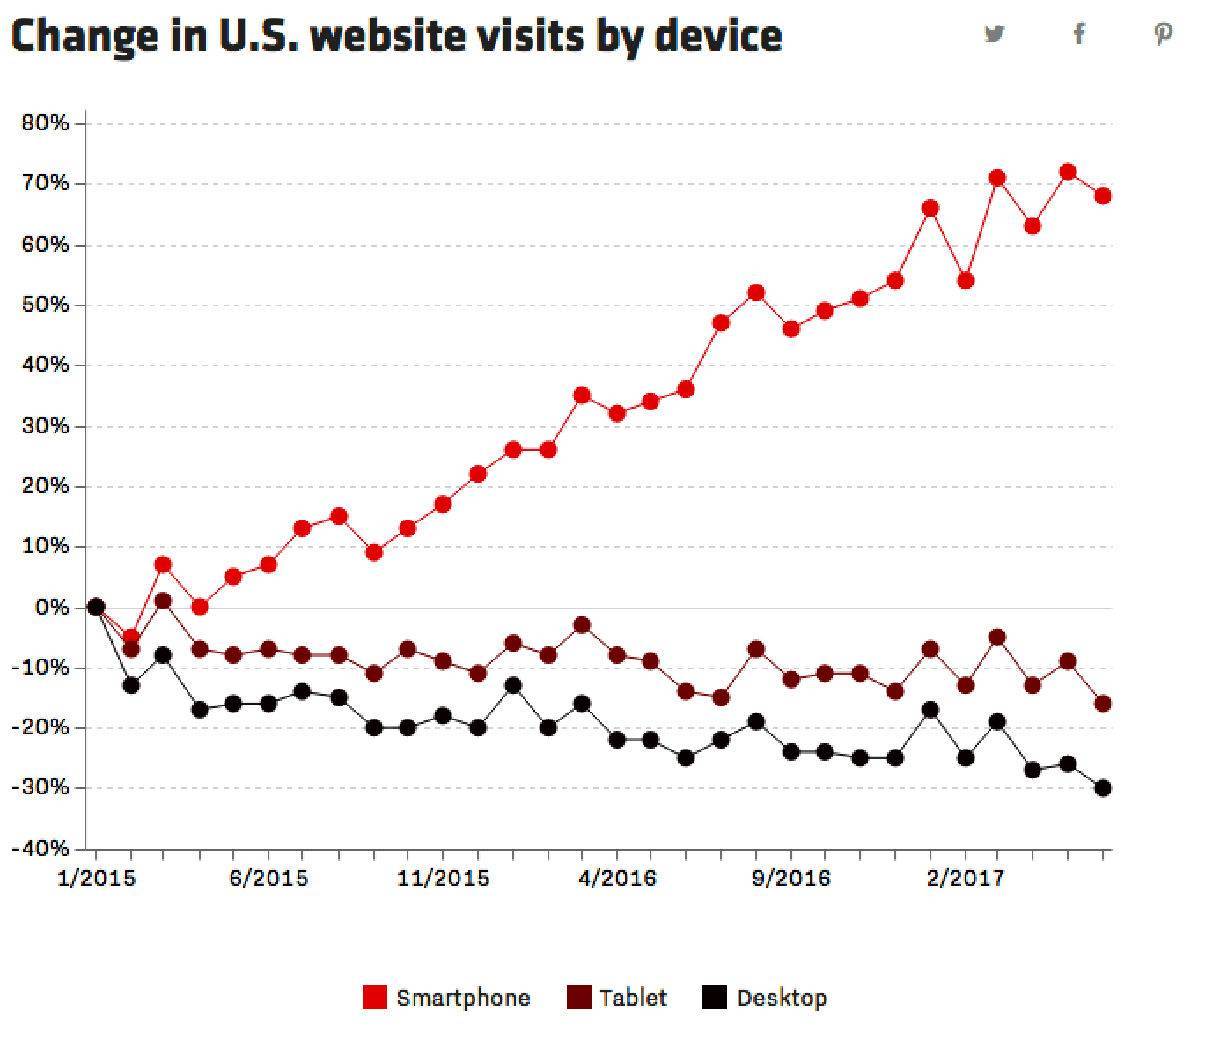 Chart showing increasing smartphone web traffic and decreasing desktop and tablet traffic